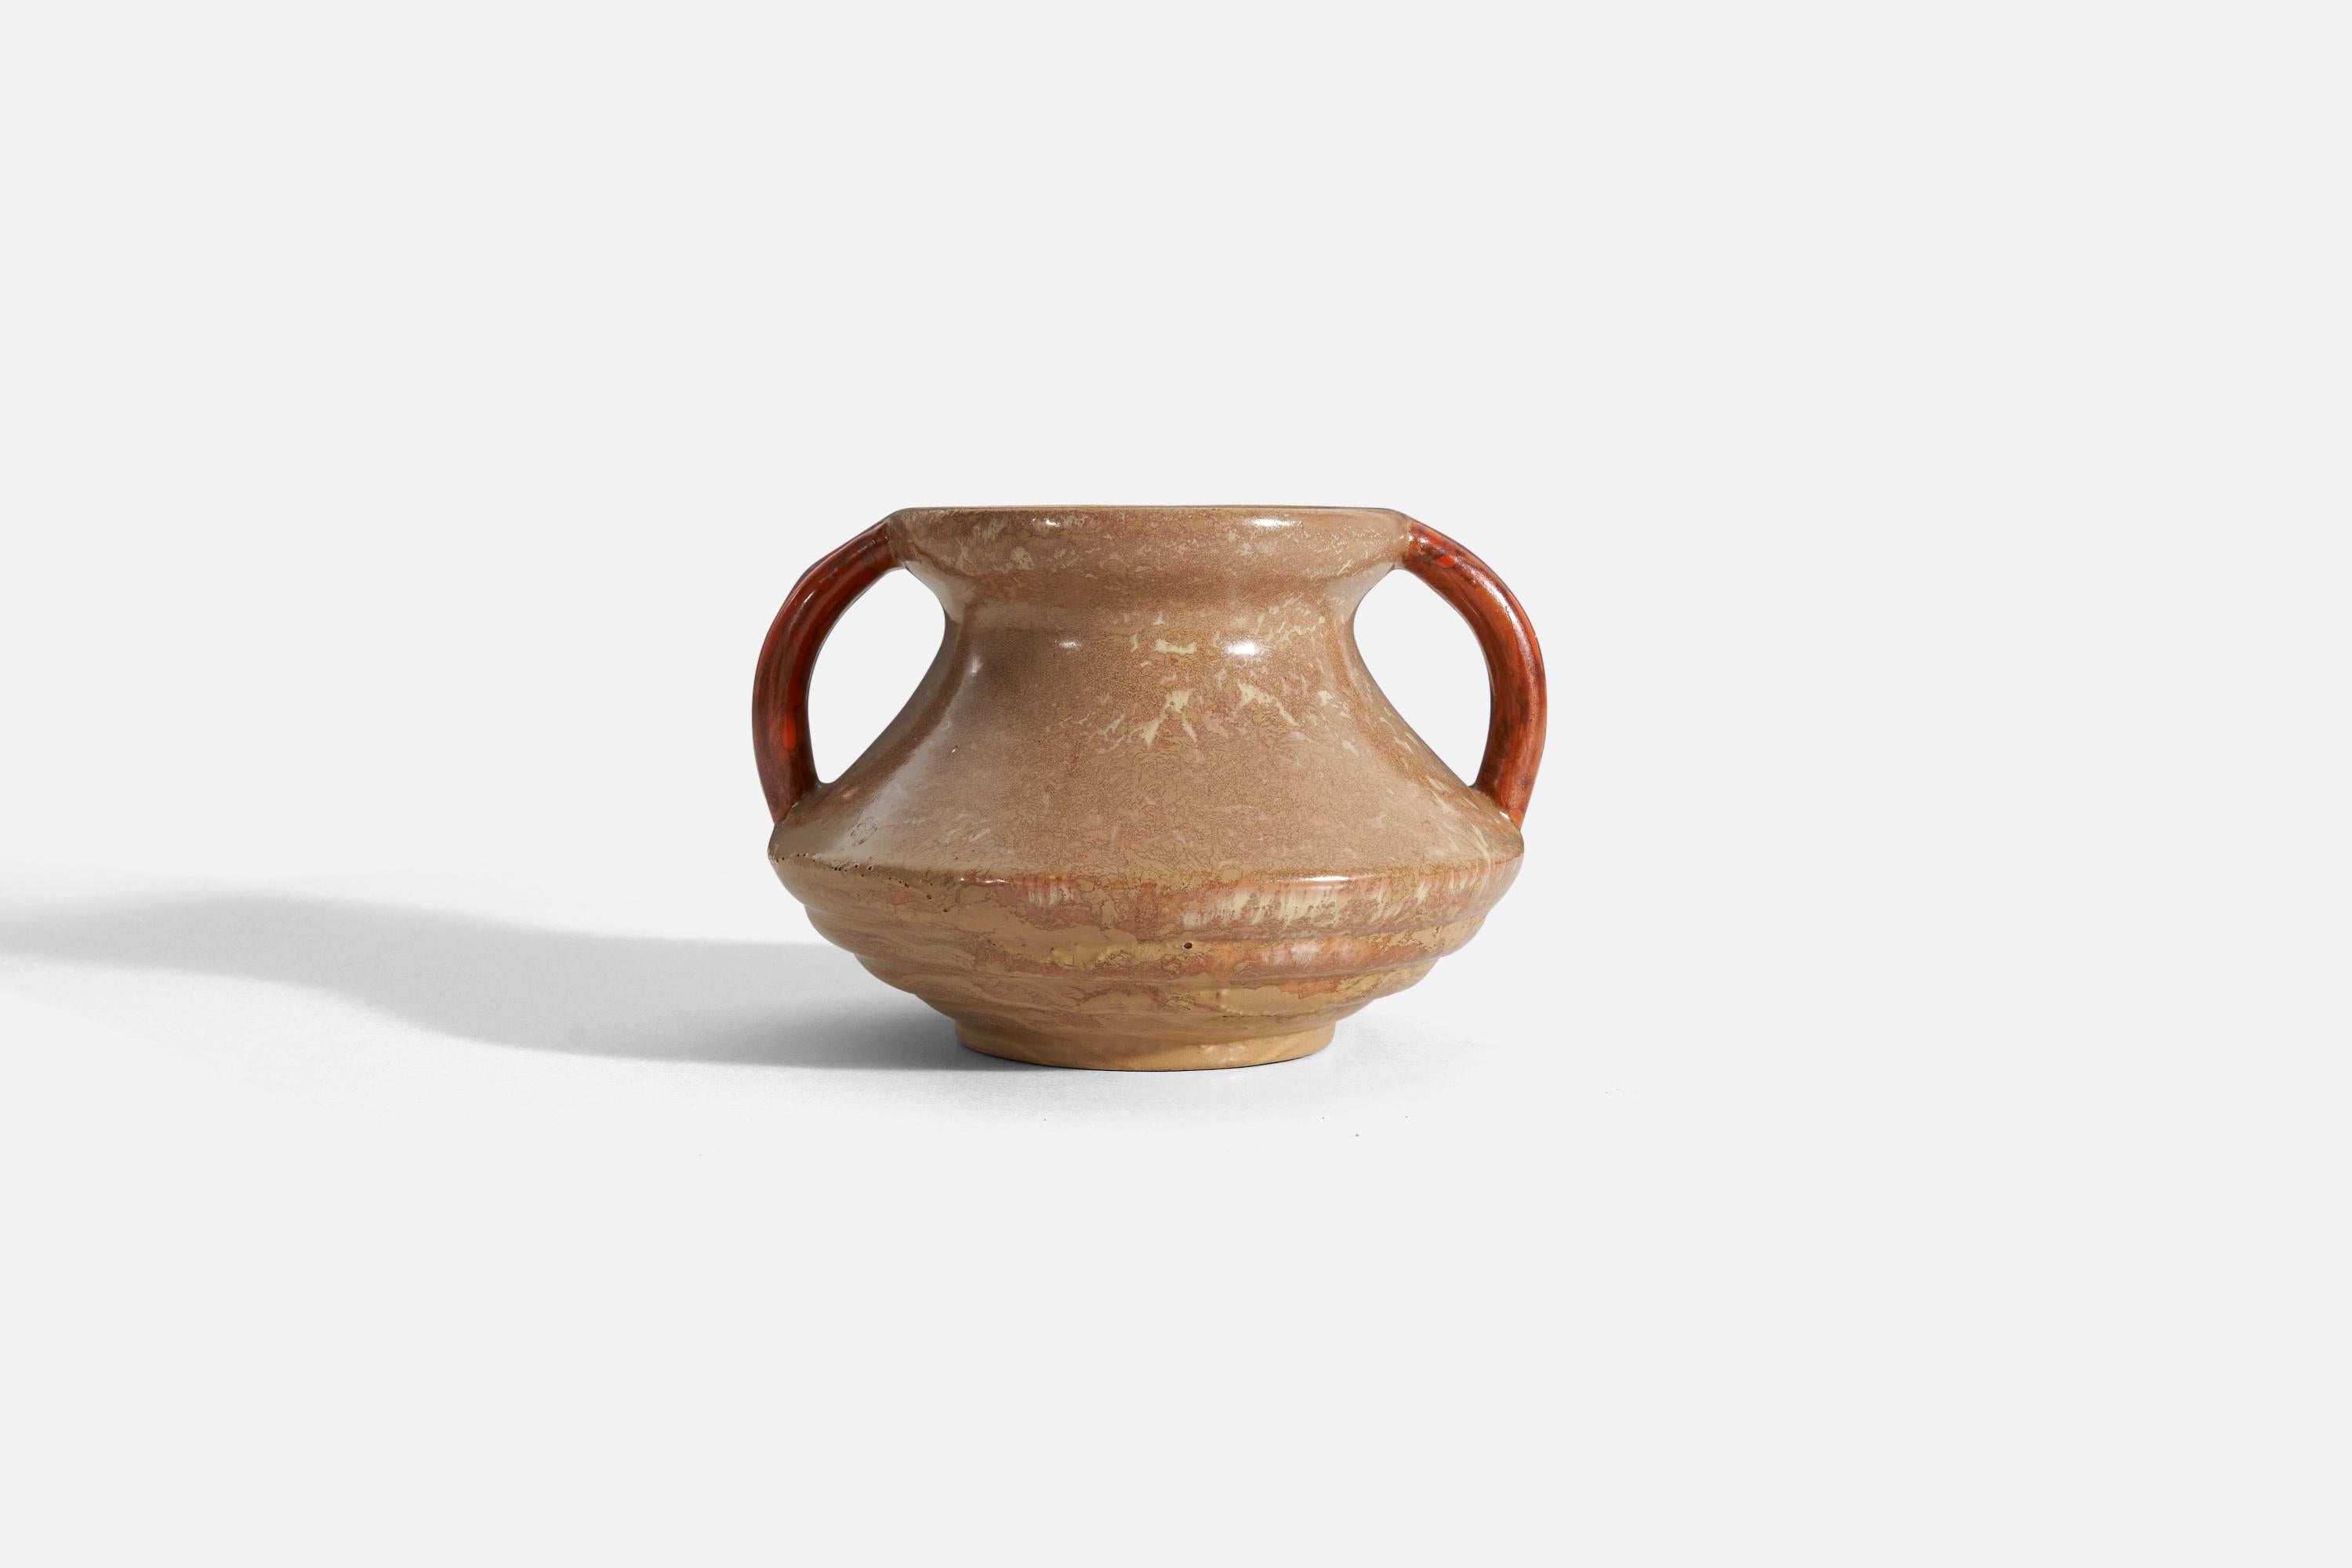 A beige-glazed stoneware vase with orange handles, designed and produced by Höganäs Keramik, Sweden, 1940s.